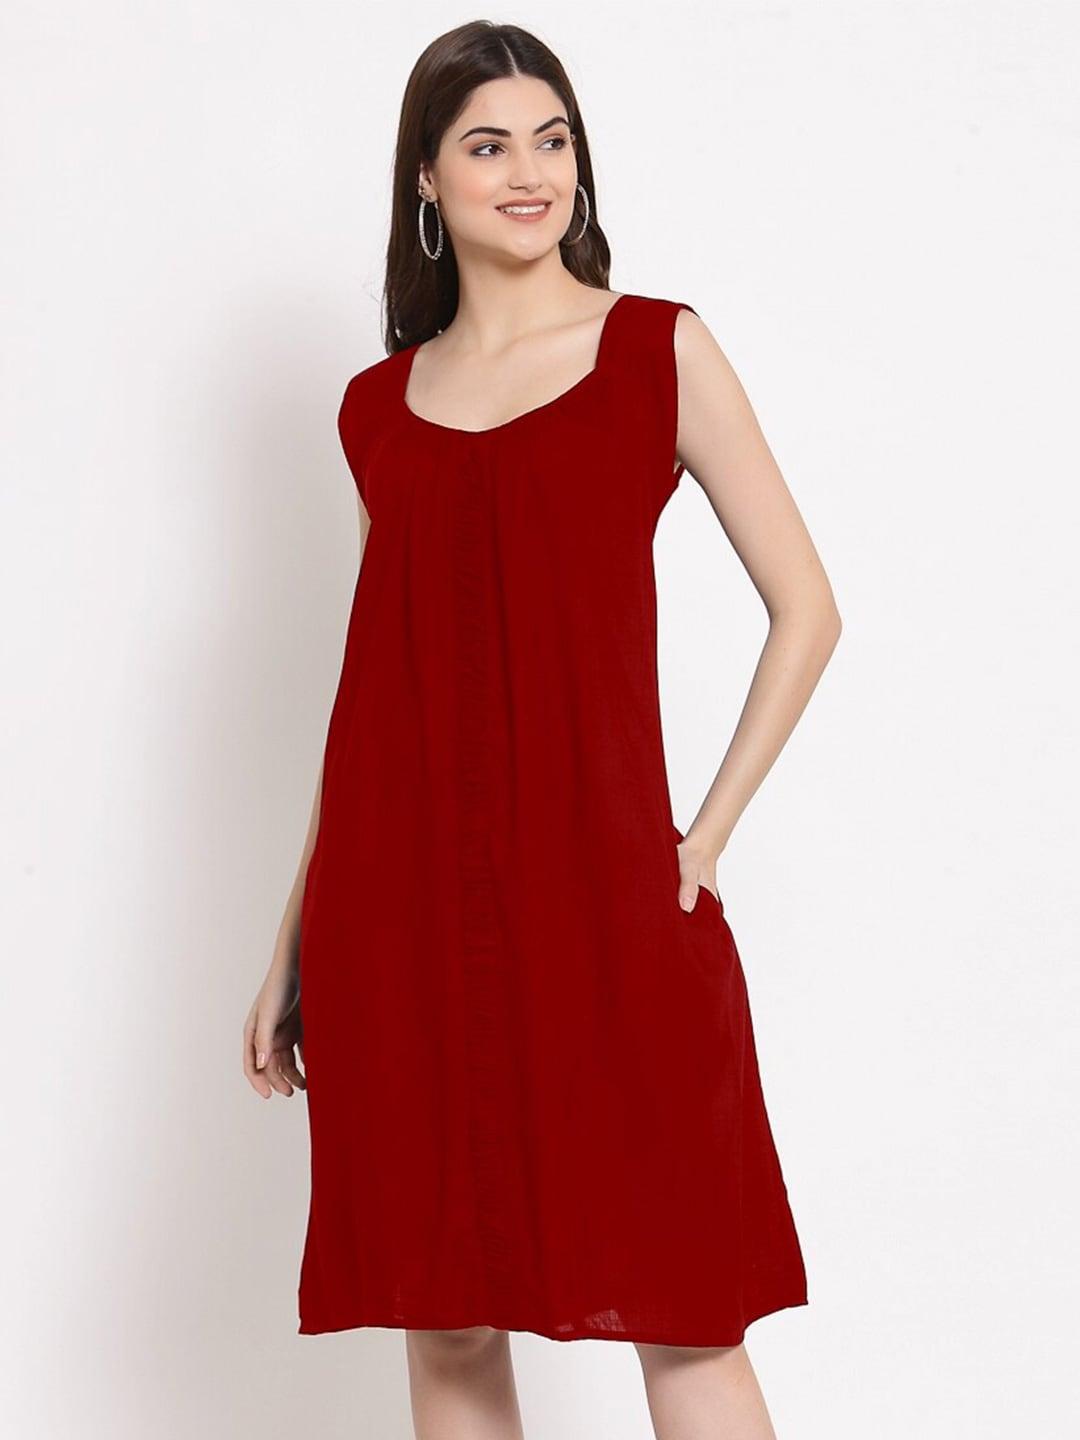 patrorna sleeveless a-line cotton dress